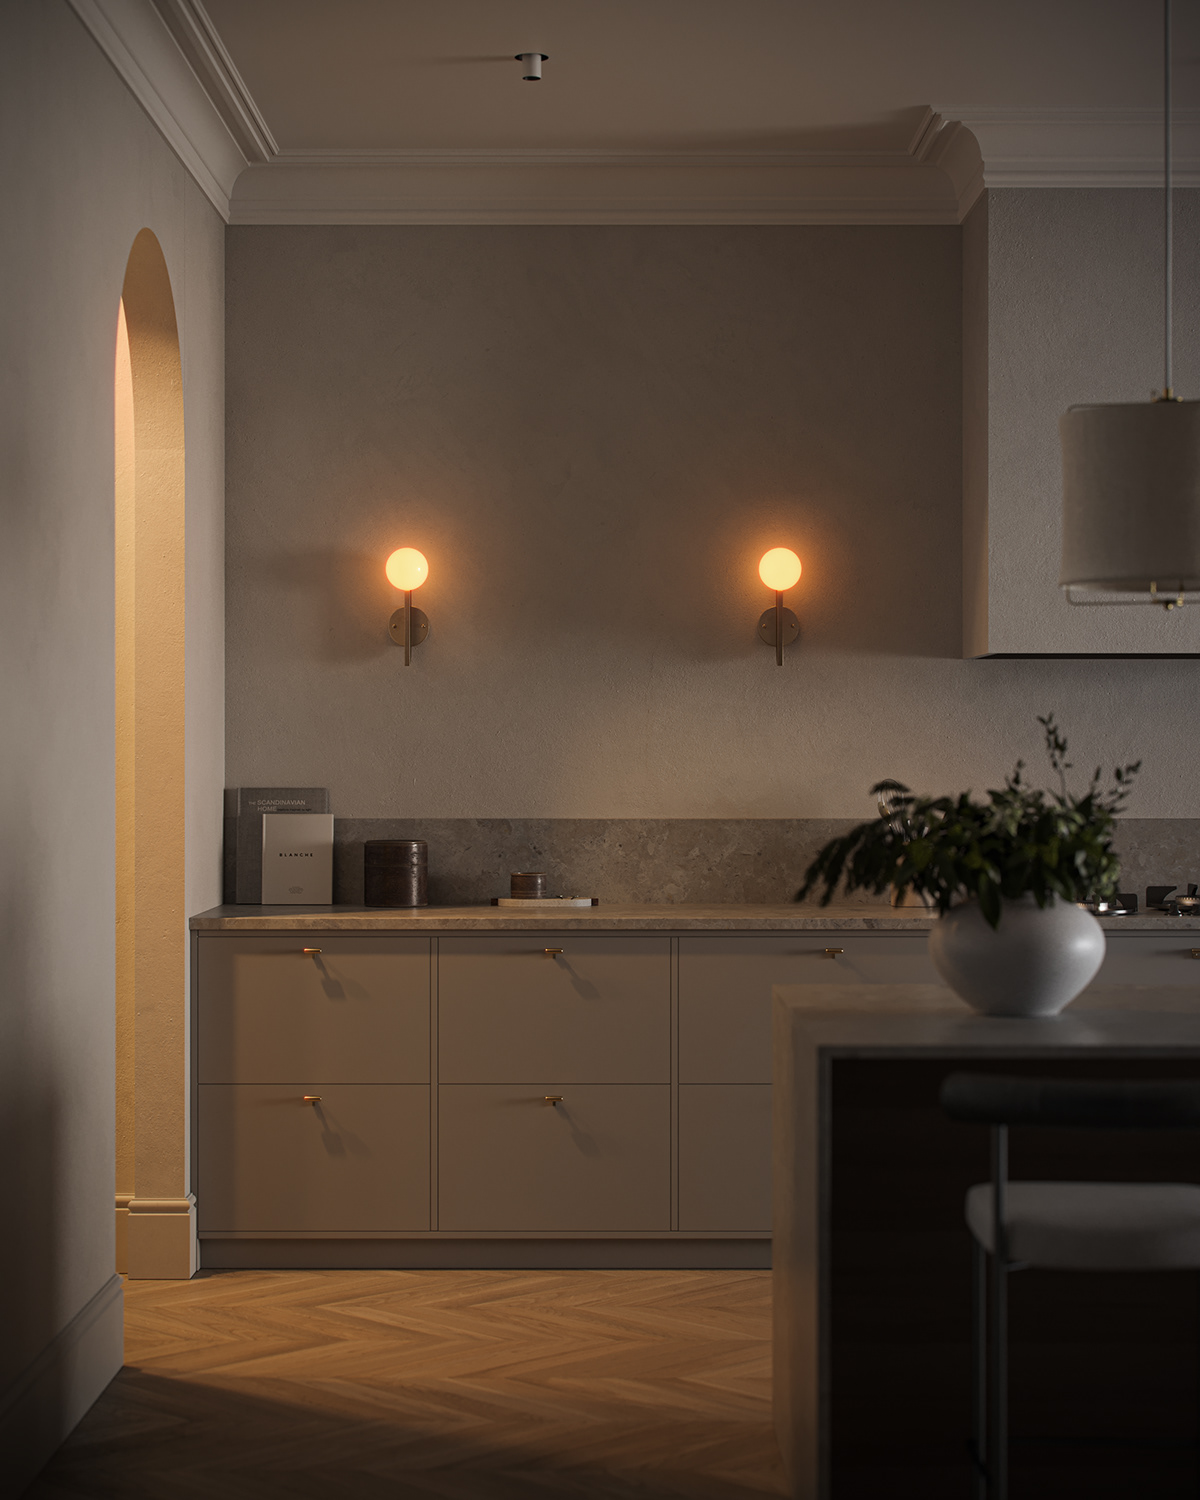 corona 3ds max Render visualization interior design  CGI design Scandinavian kitchen mood